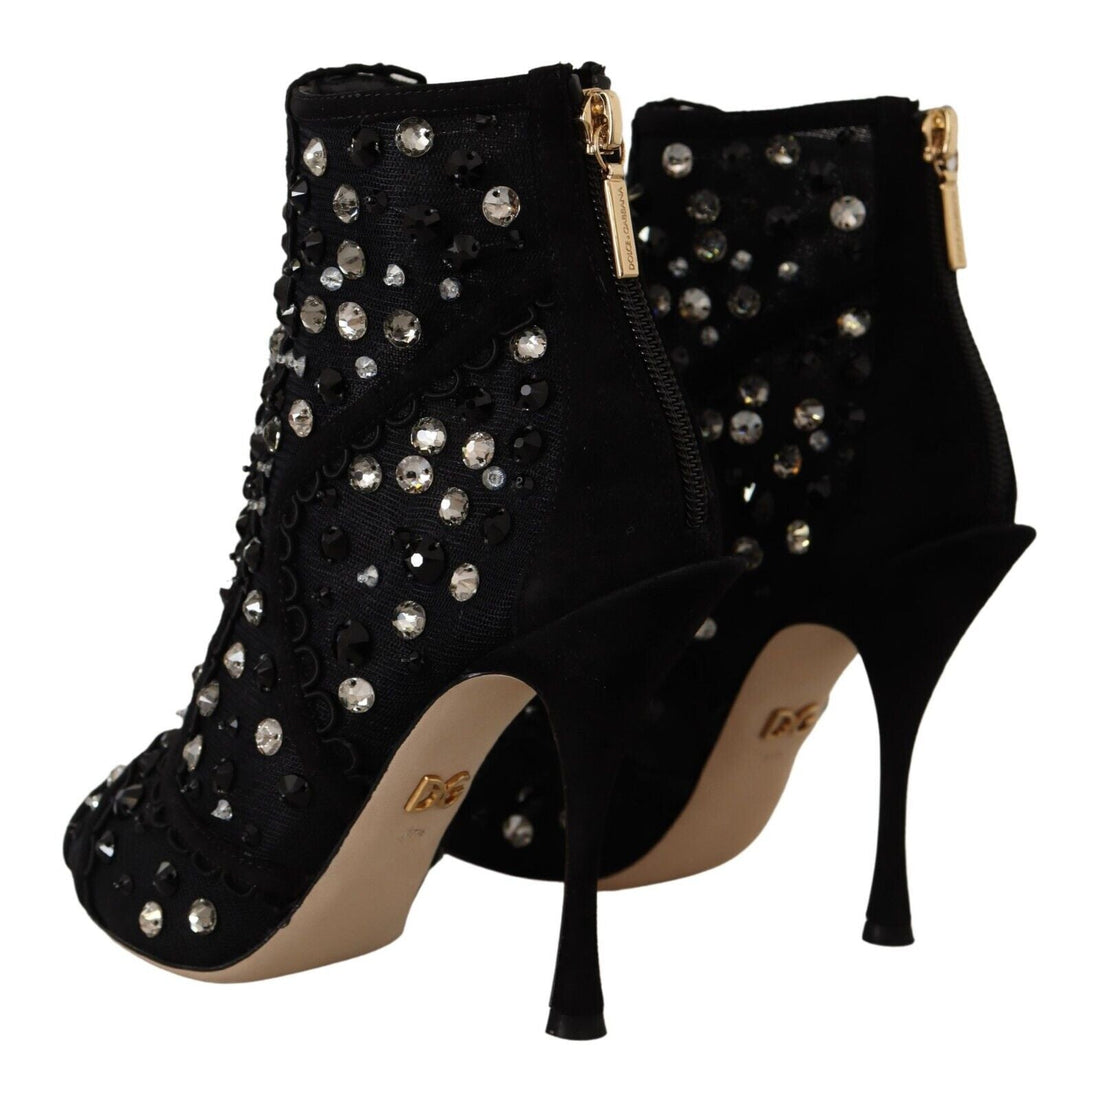 Dolce & Gabbana Black Crystals Heels Zipper Short Boots Shoes